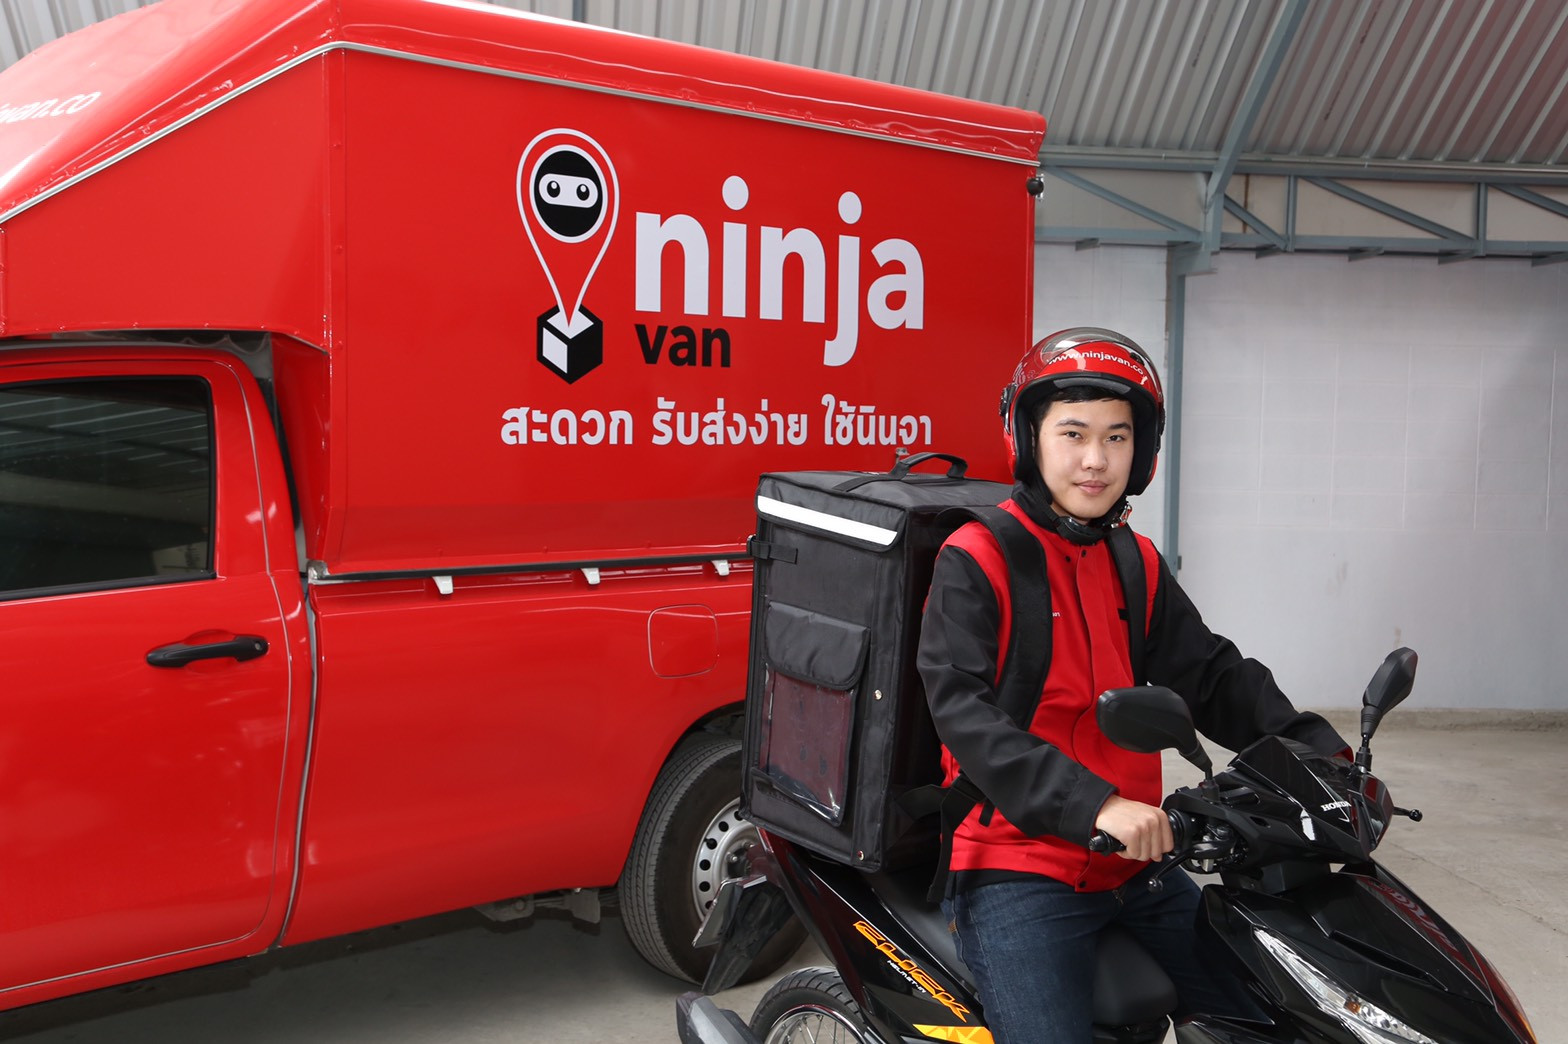 Ninjavan customer service